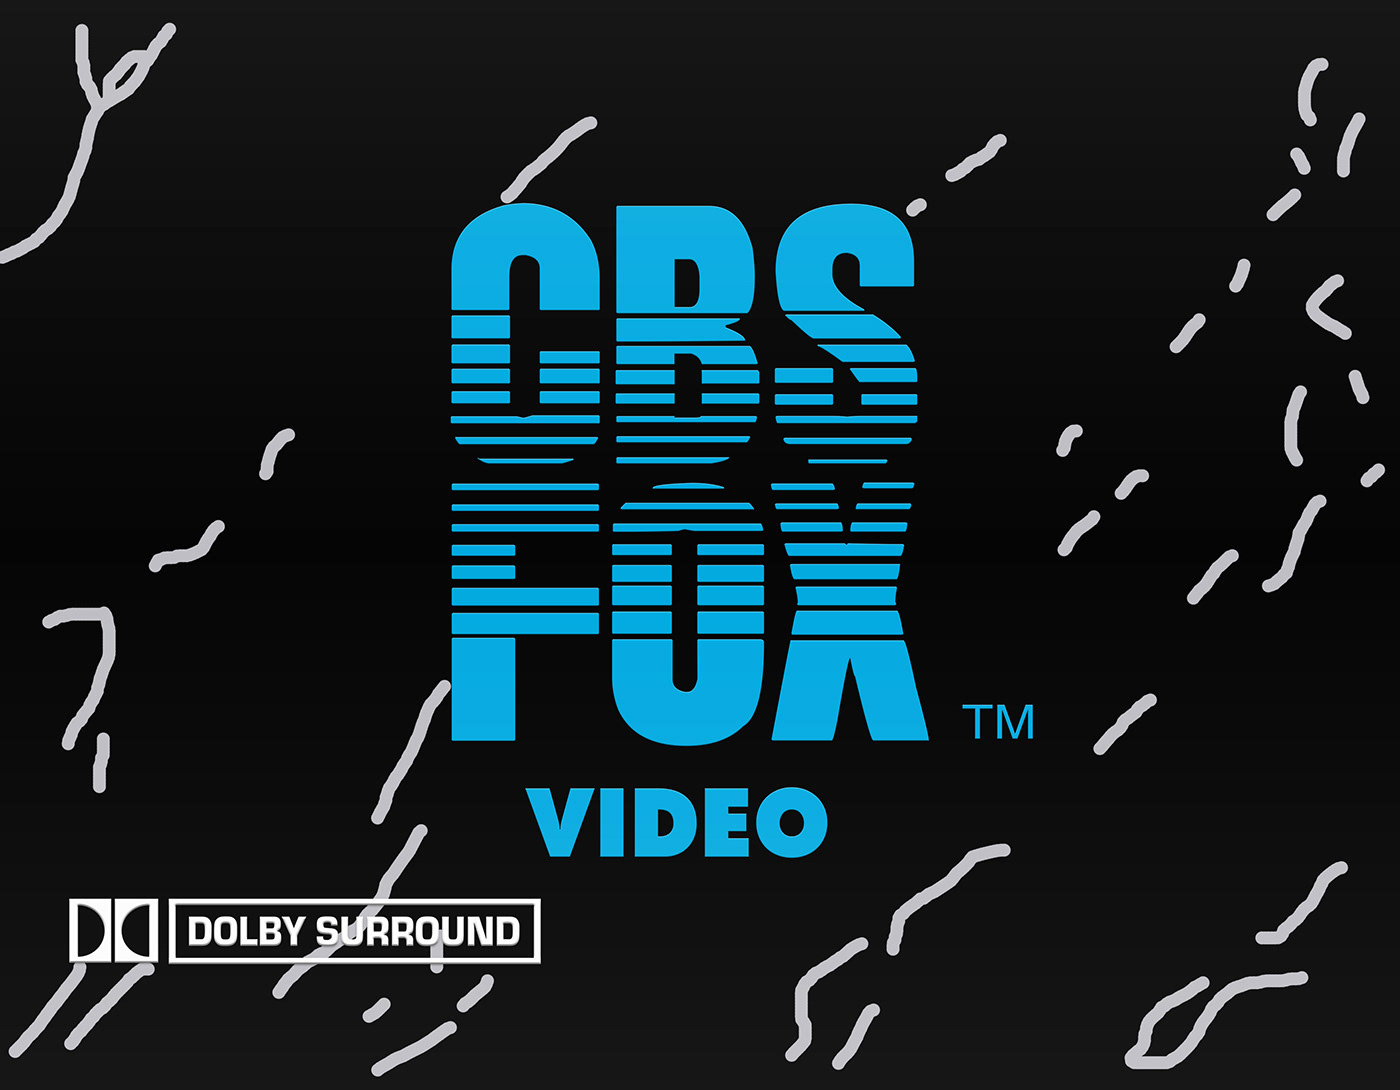 CBS Fox Video openings